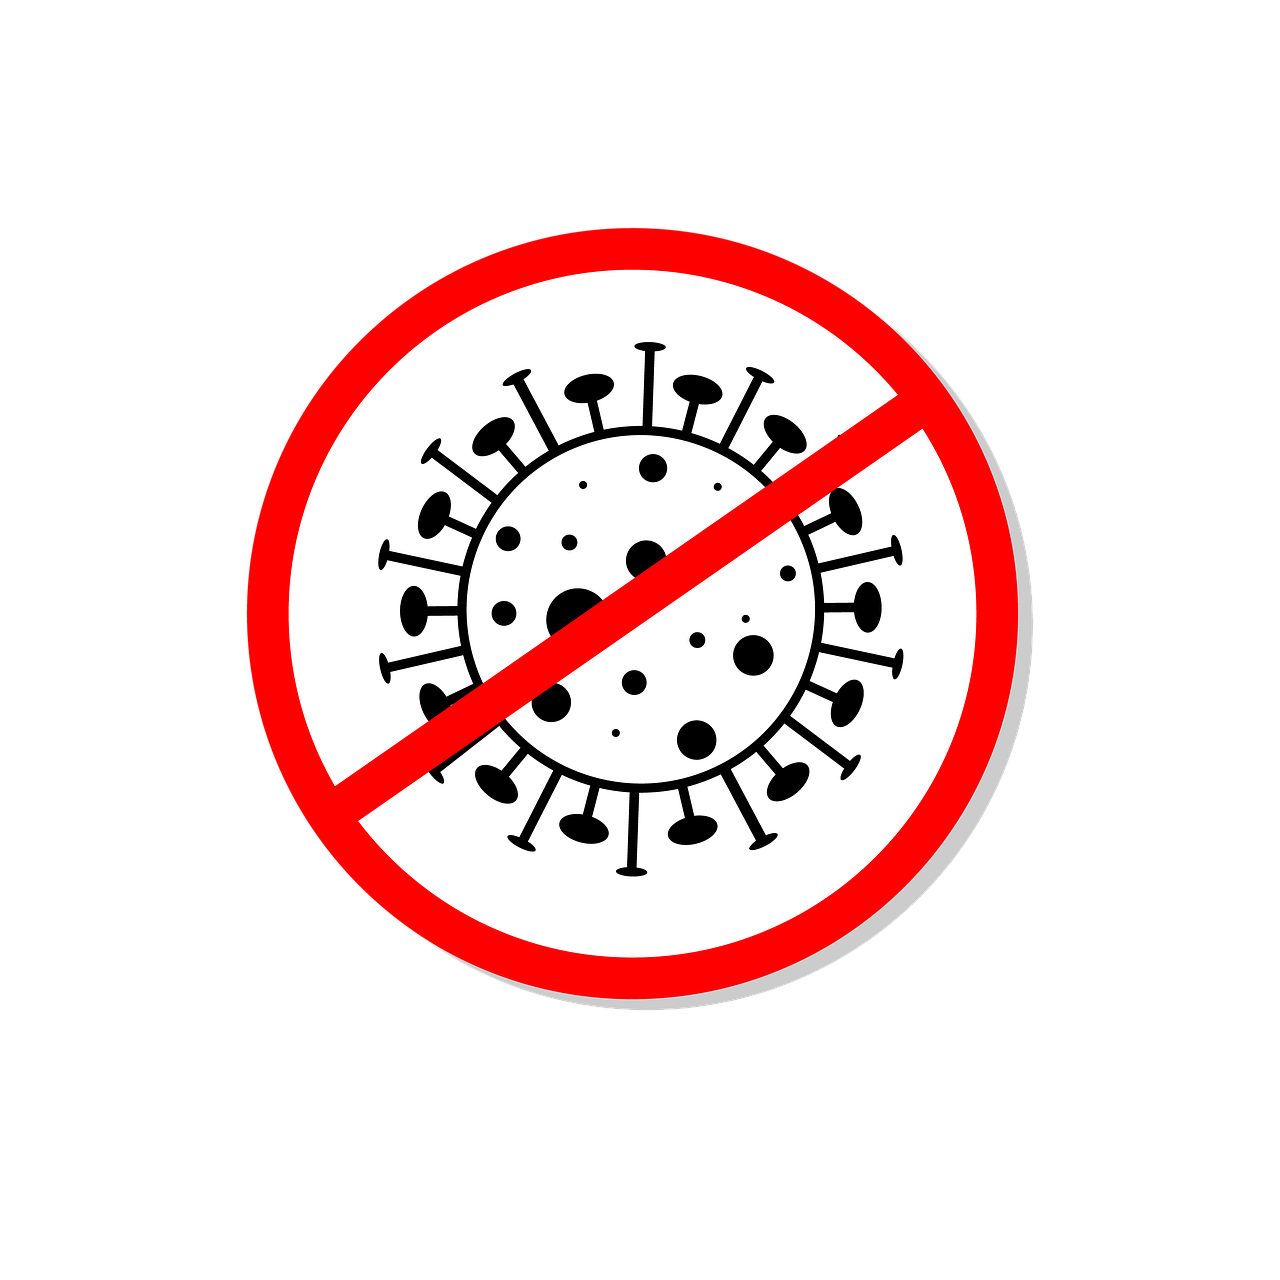 Download PNG image - Ban Symbol PNG Clipart 